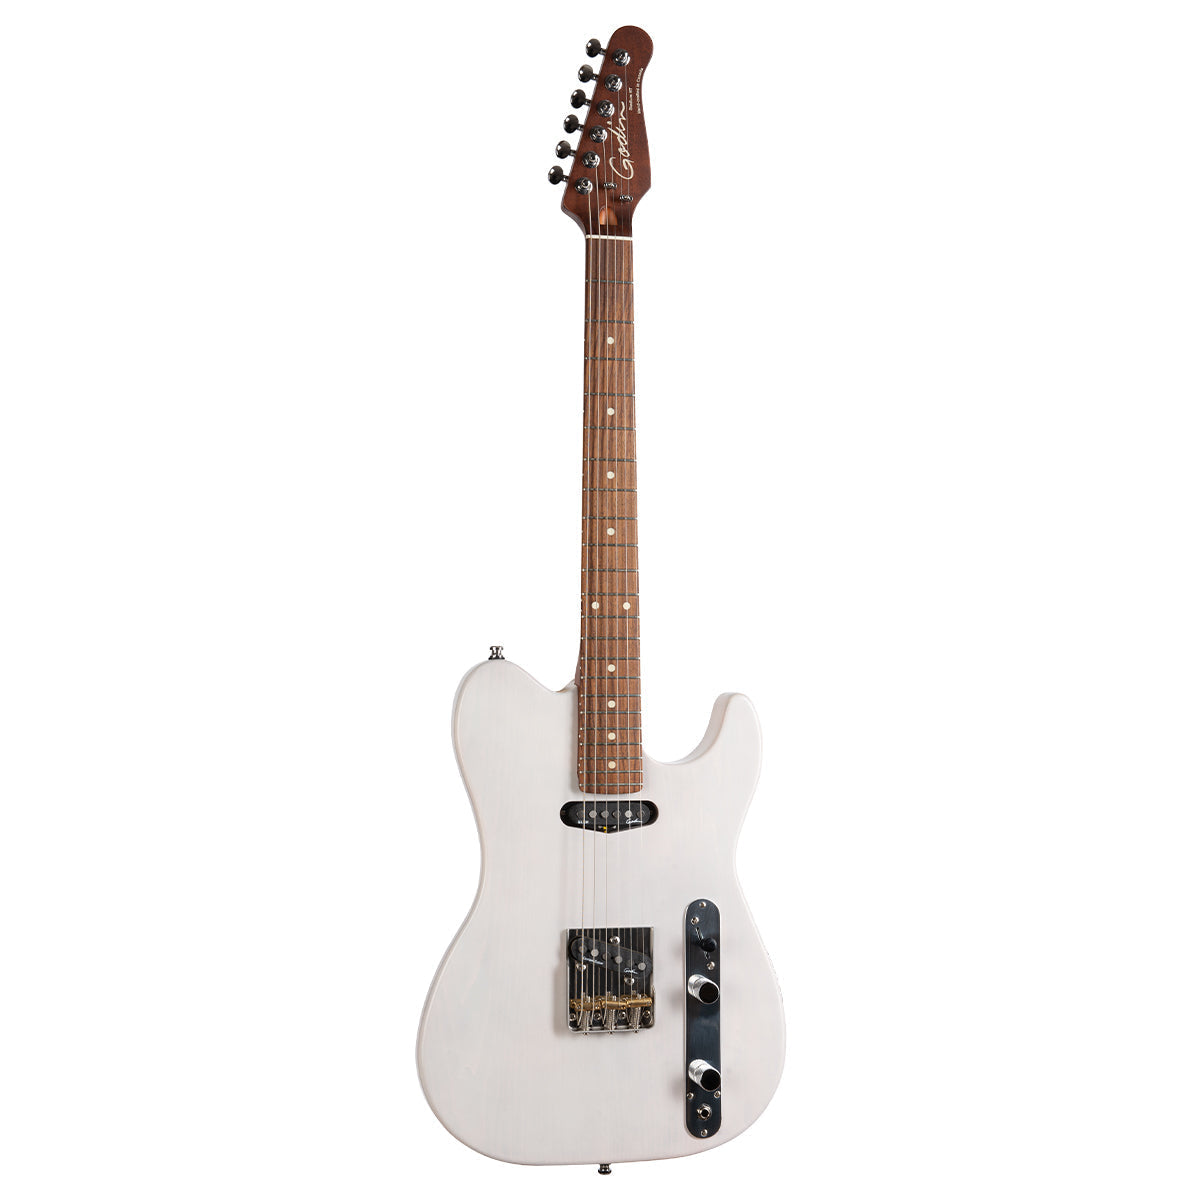 Godin Stadium HT Electric Guitar ~ Trans White RN, Electric Guitar for sale at Richards Guitars.